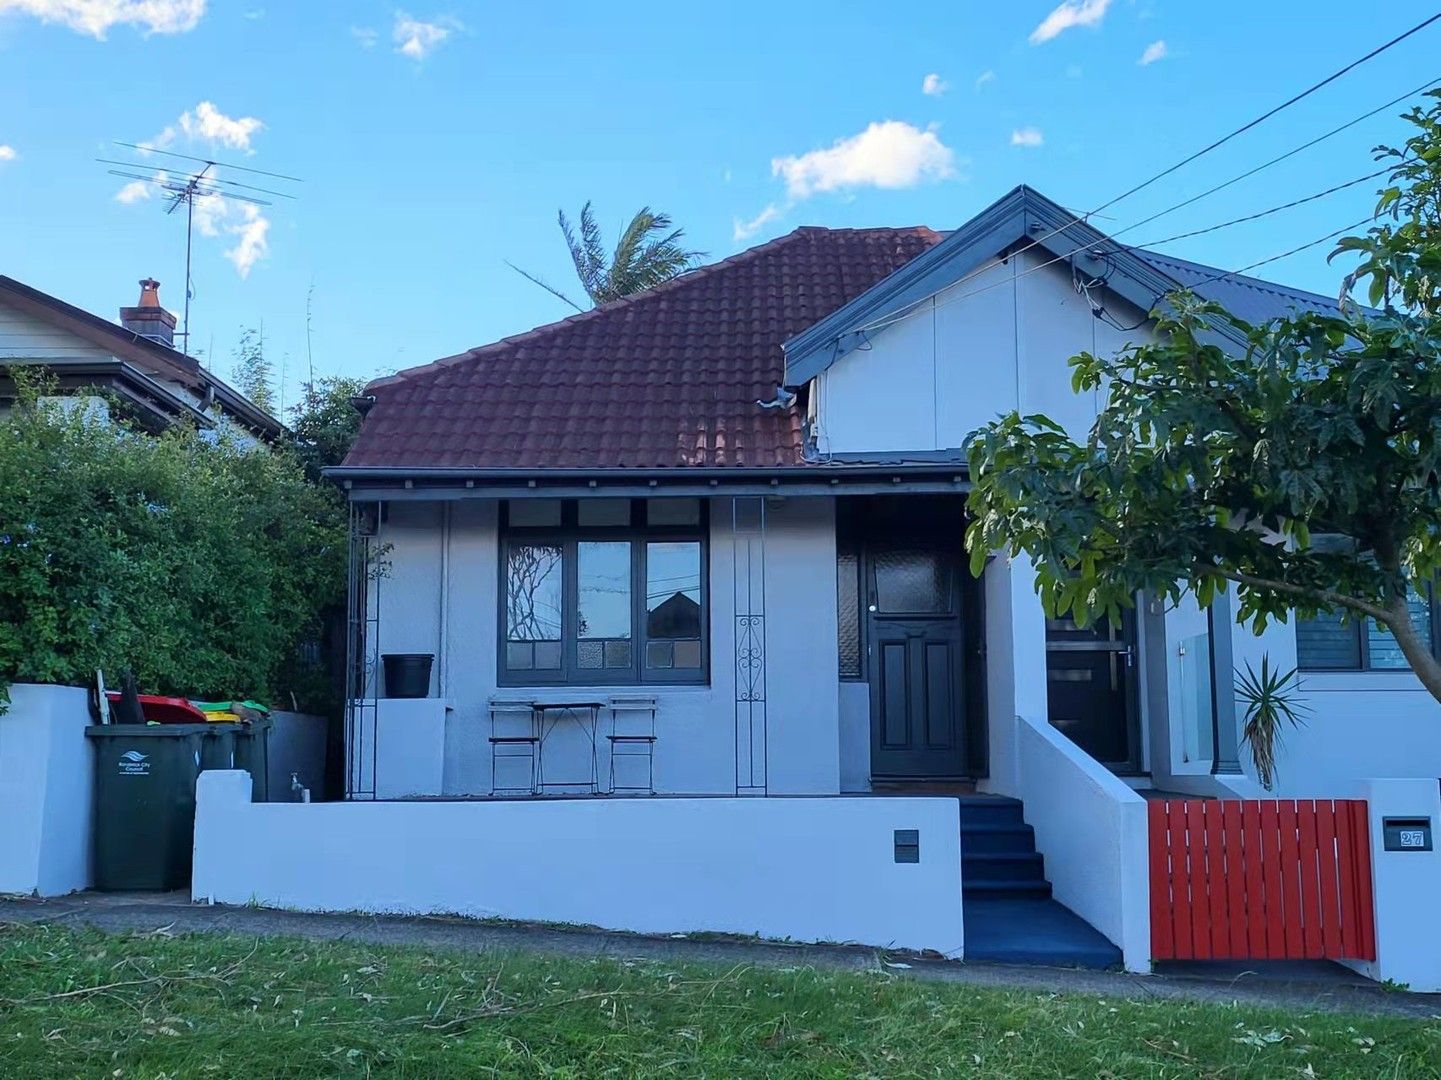 3 bedrooms House in 25 Creer Street RANDWICK NSW, 2031